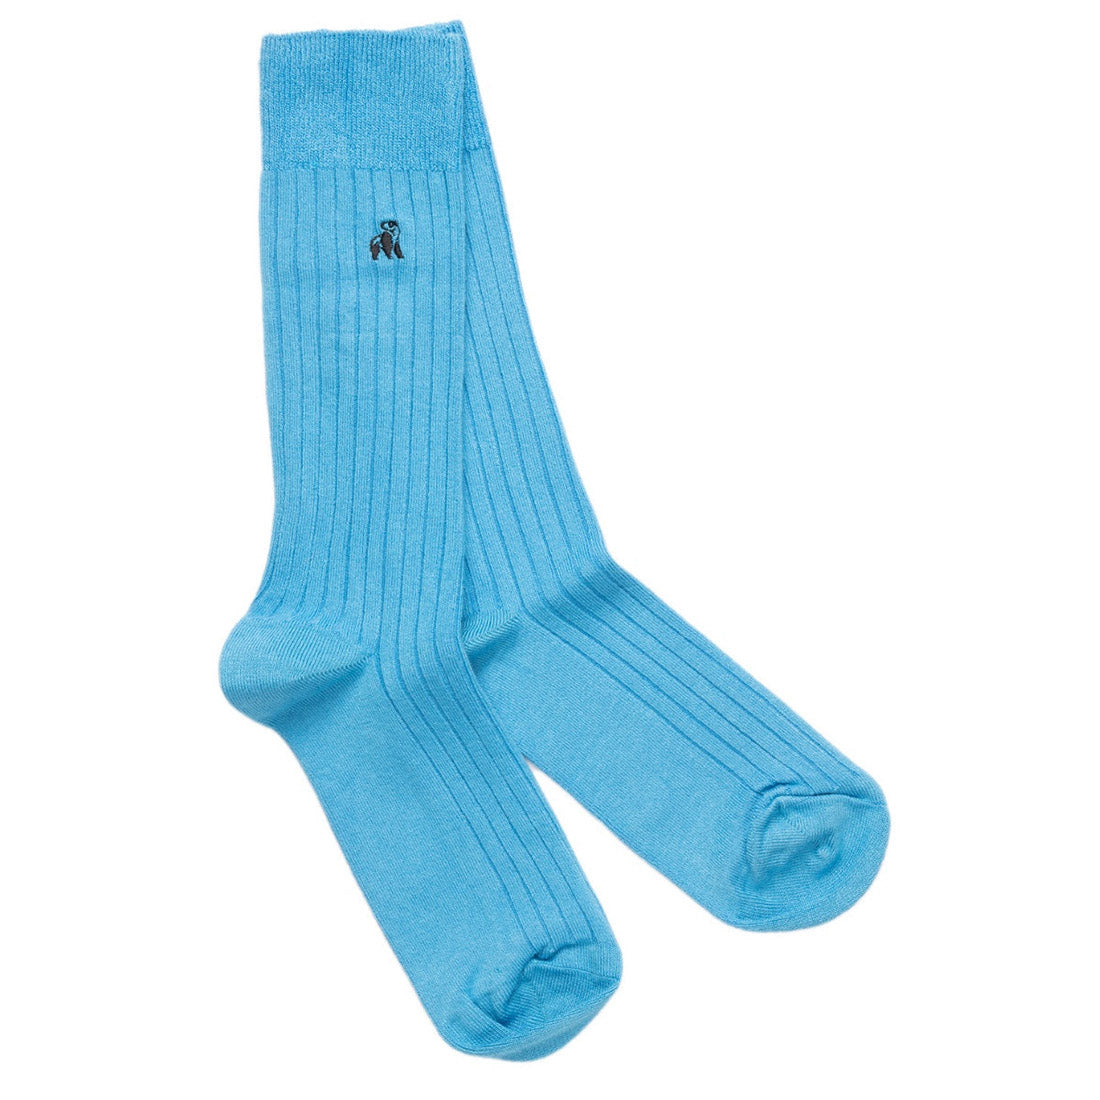 socks-sky-blue-bamboo-socks-1_9cec967b-8c2c-458d-bfc0-9d0fa3ccbe56.jpg